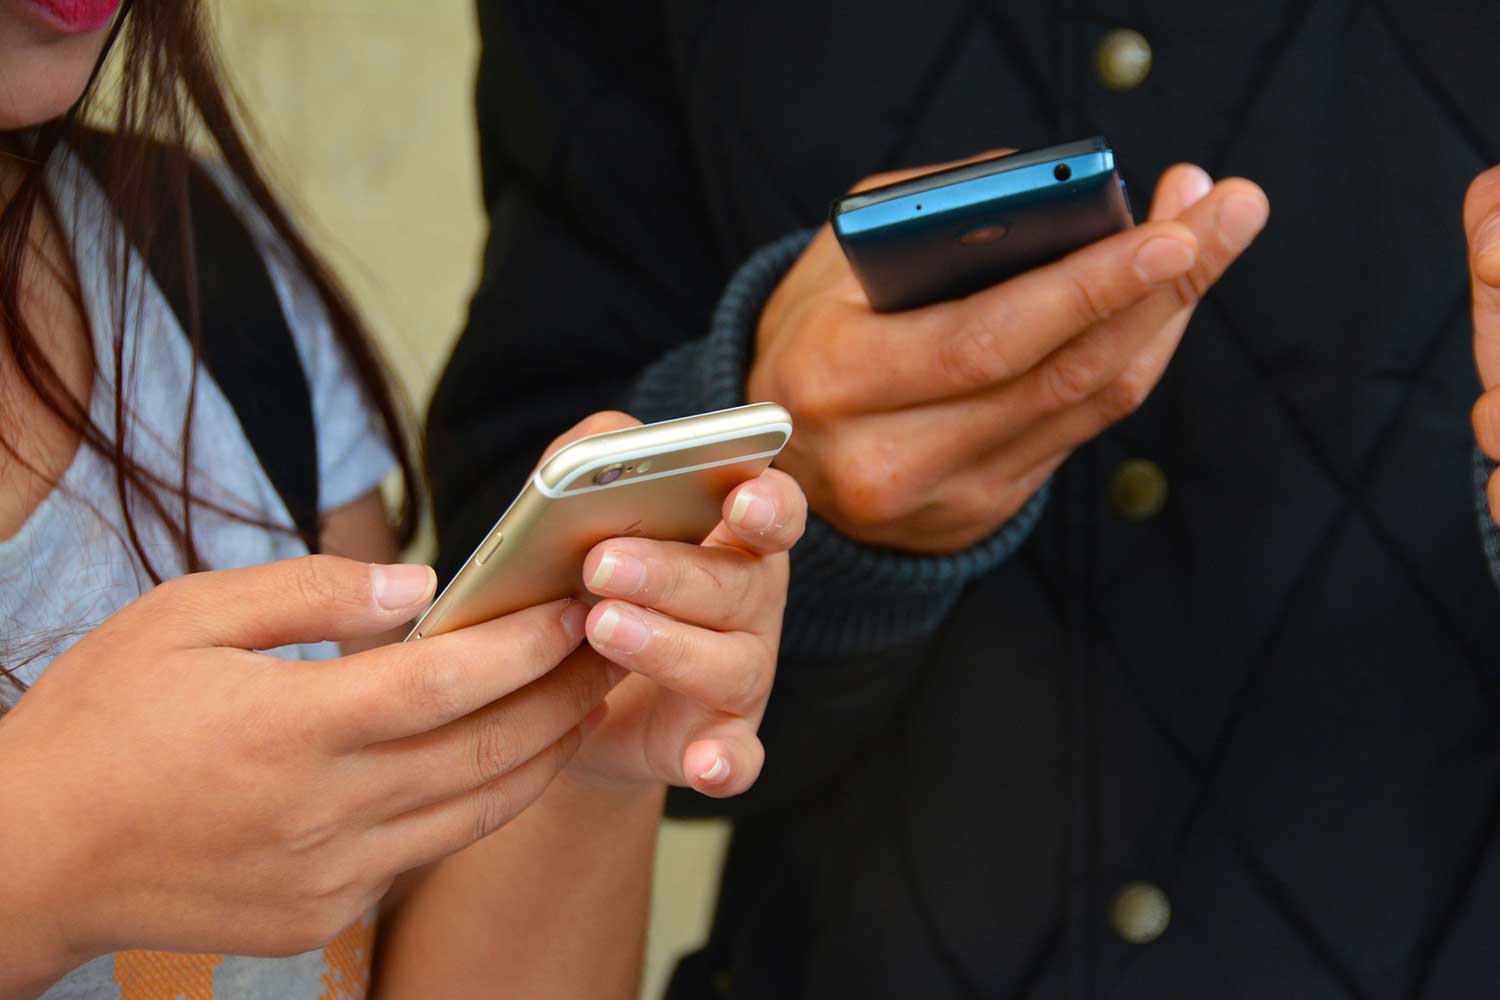 Teens Relationships to Cell Phones | Harvard Graduate School of Education